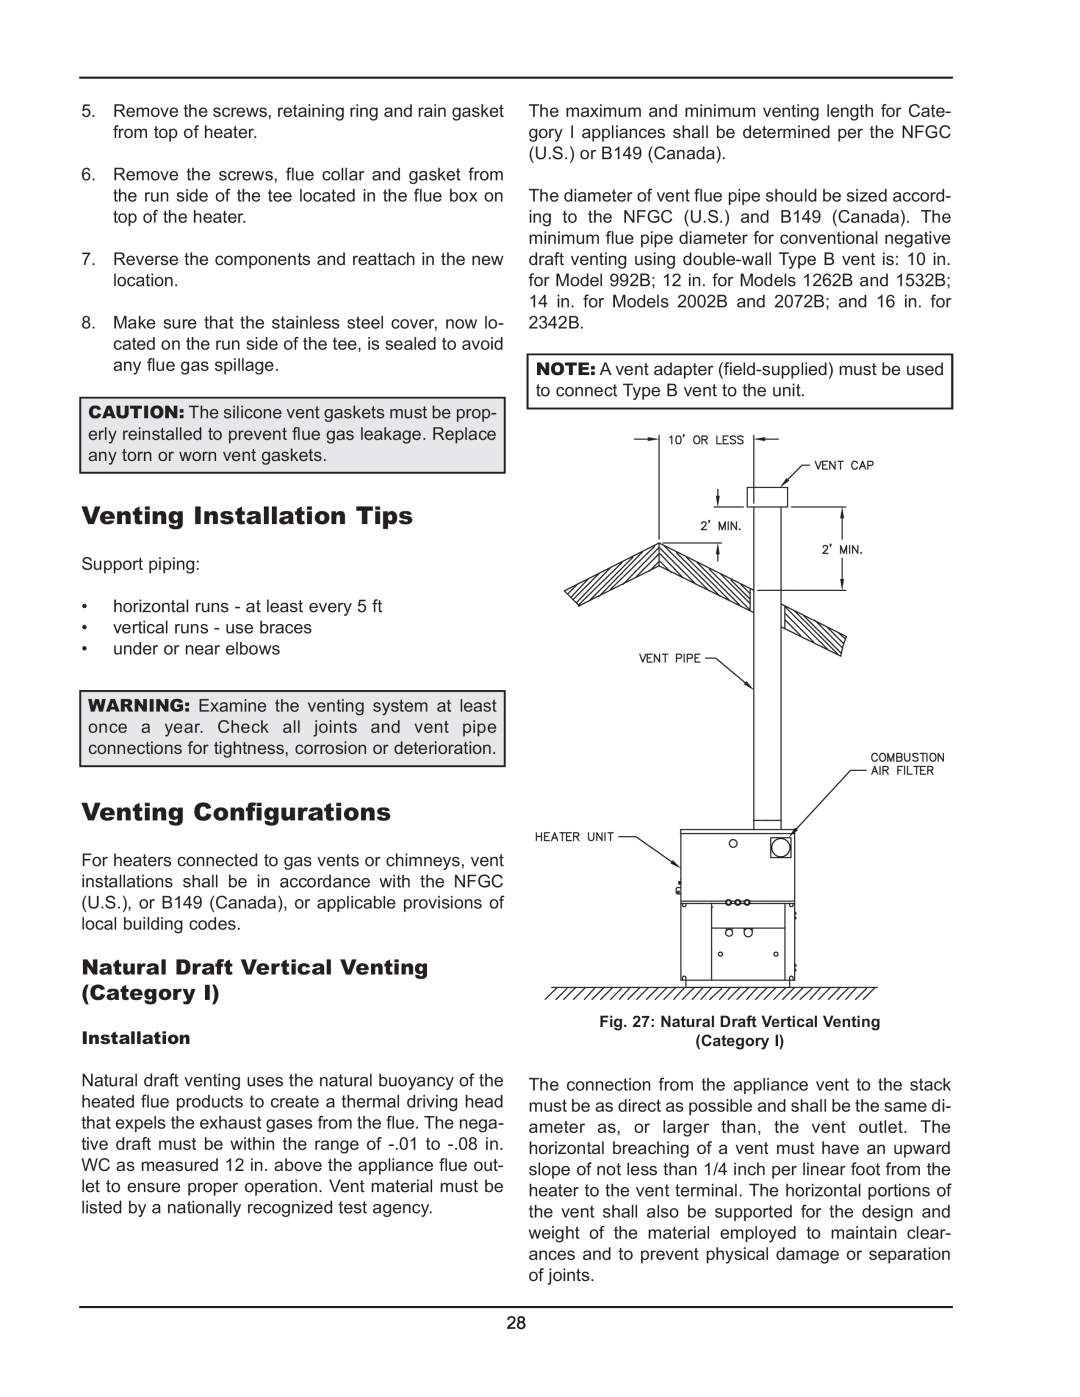 Raypak 992B-1262B manual Venting Installation Tips, Venting Configurations, Natural Draft Vertical Venting Category 